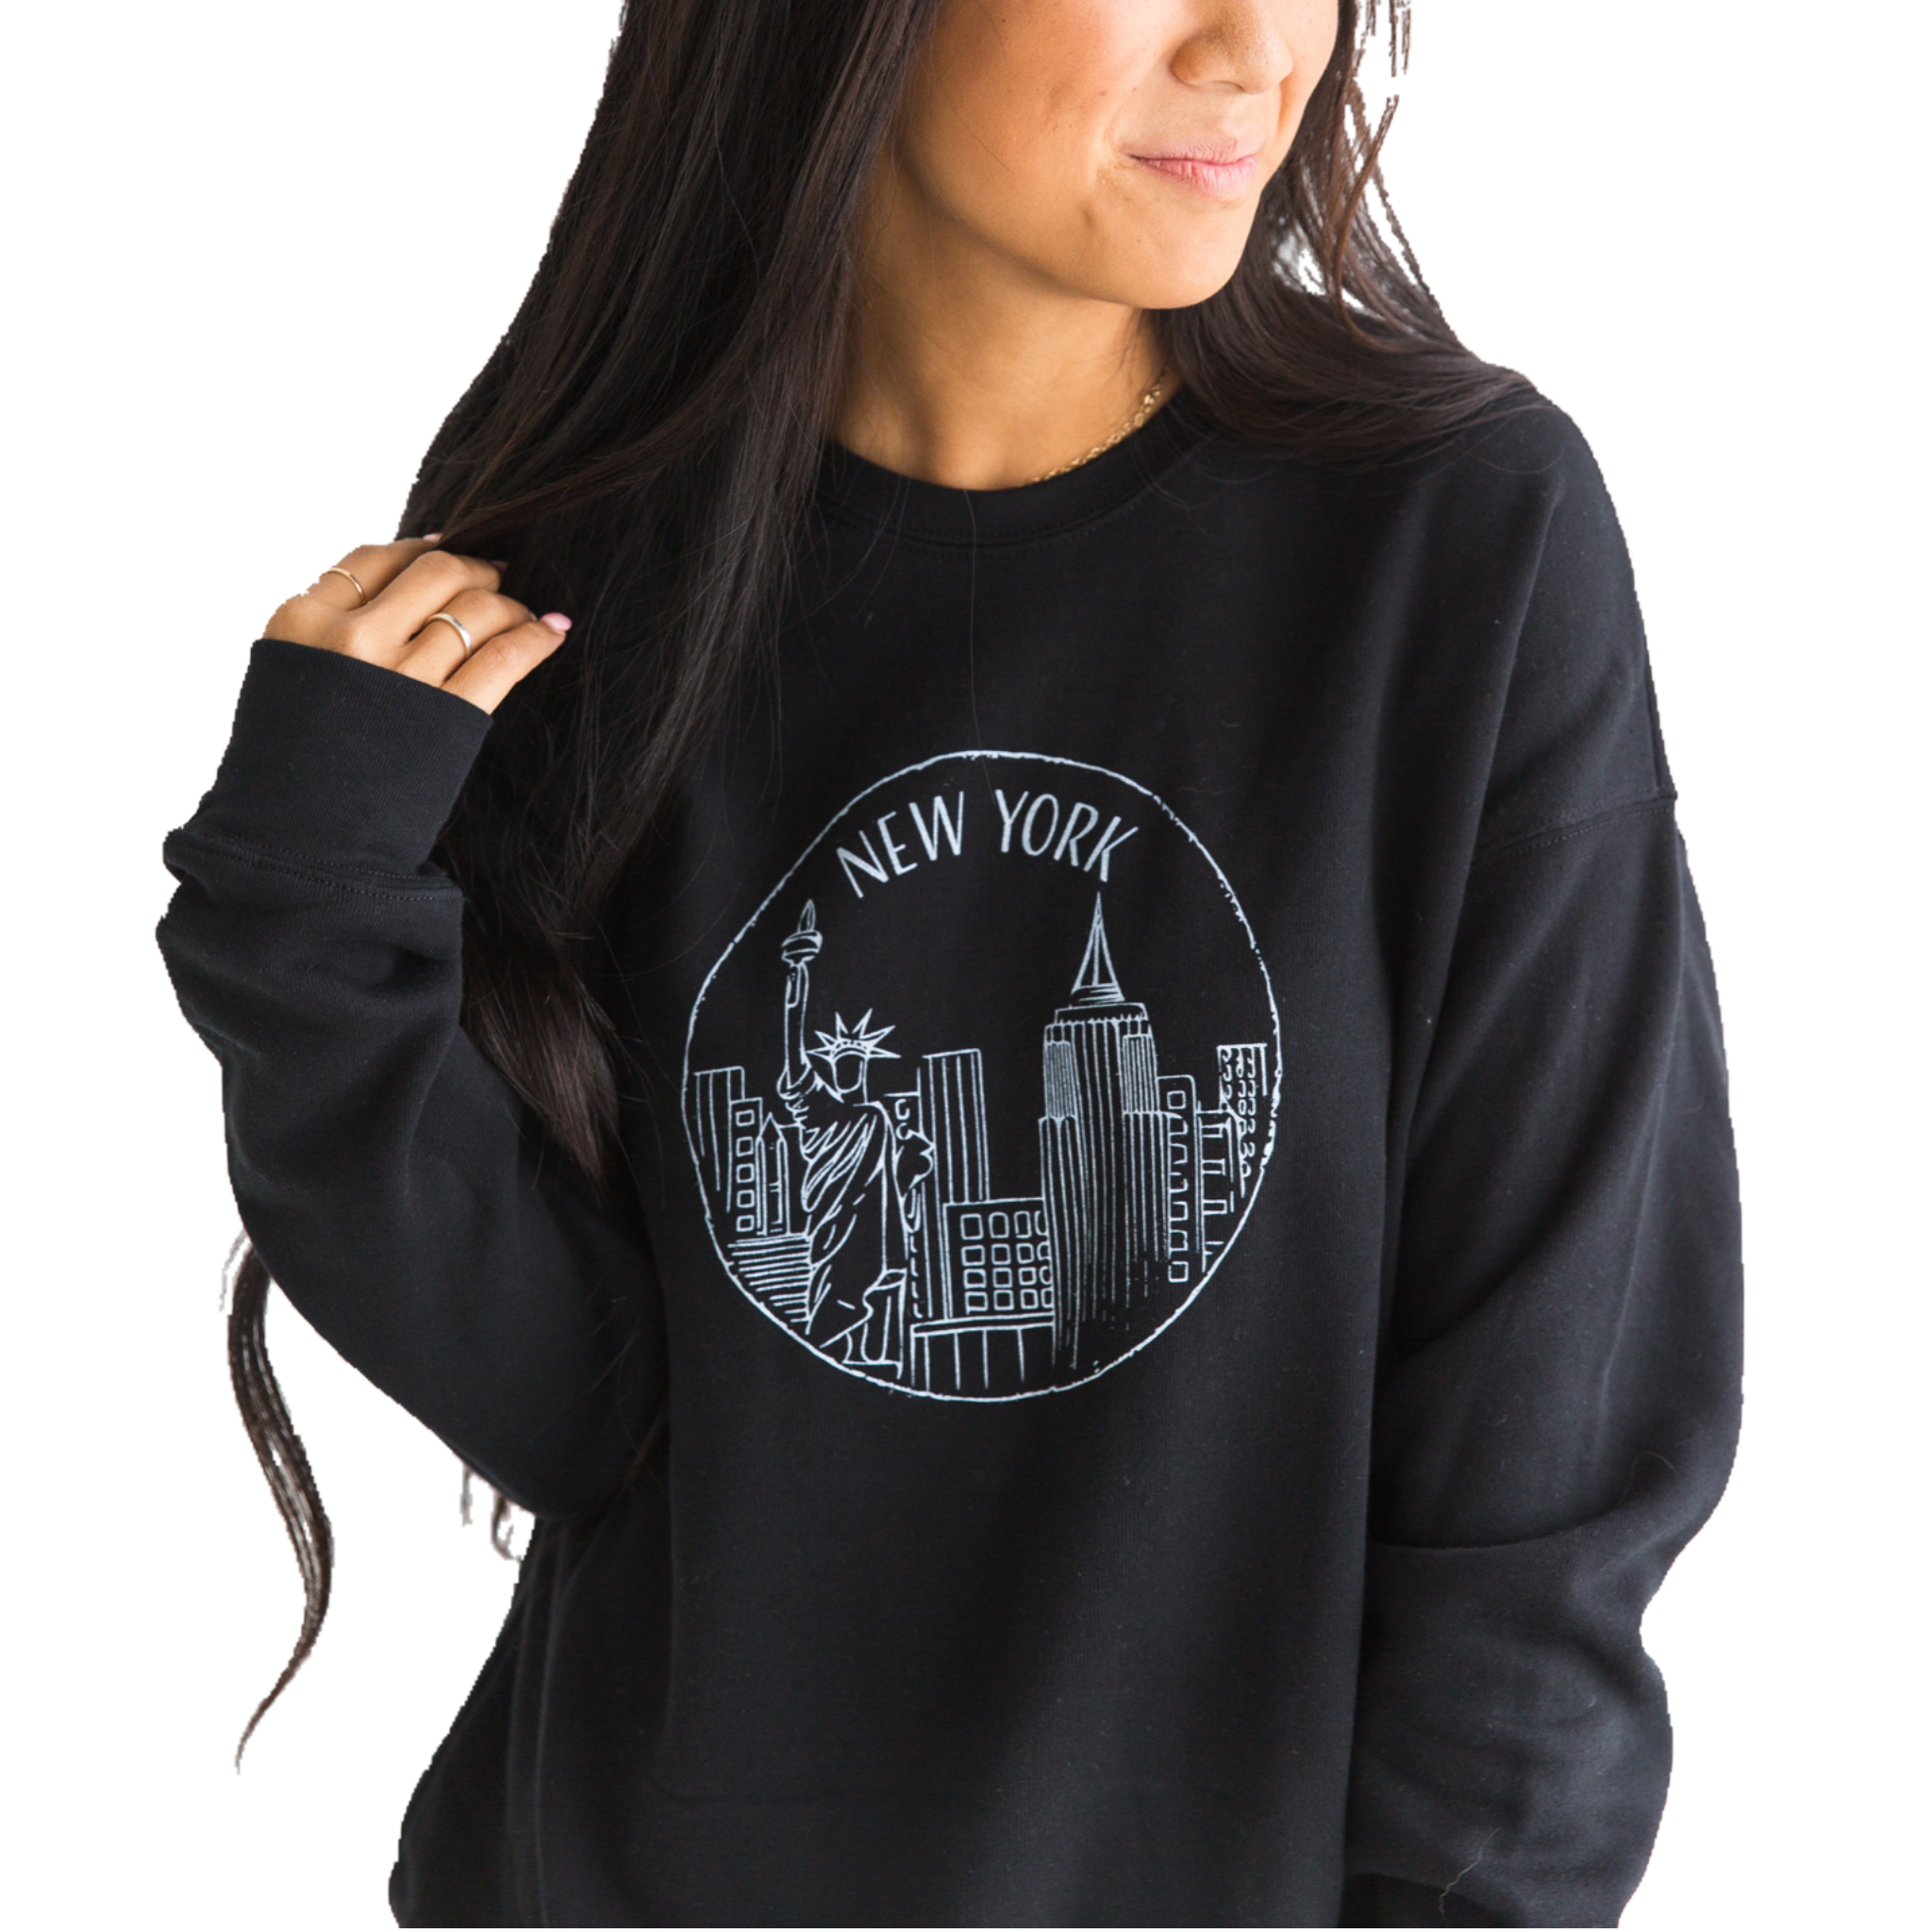 New York Sweatshirt - Black - Unisex - Shop Back Home